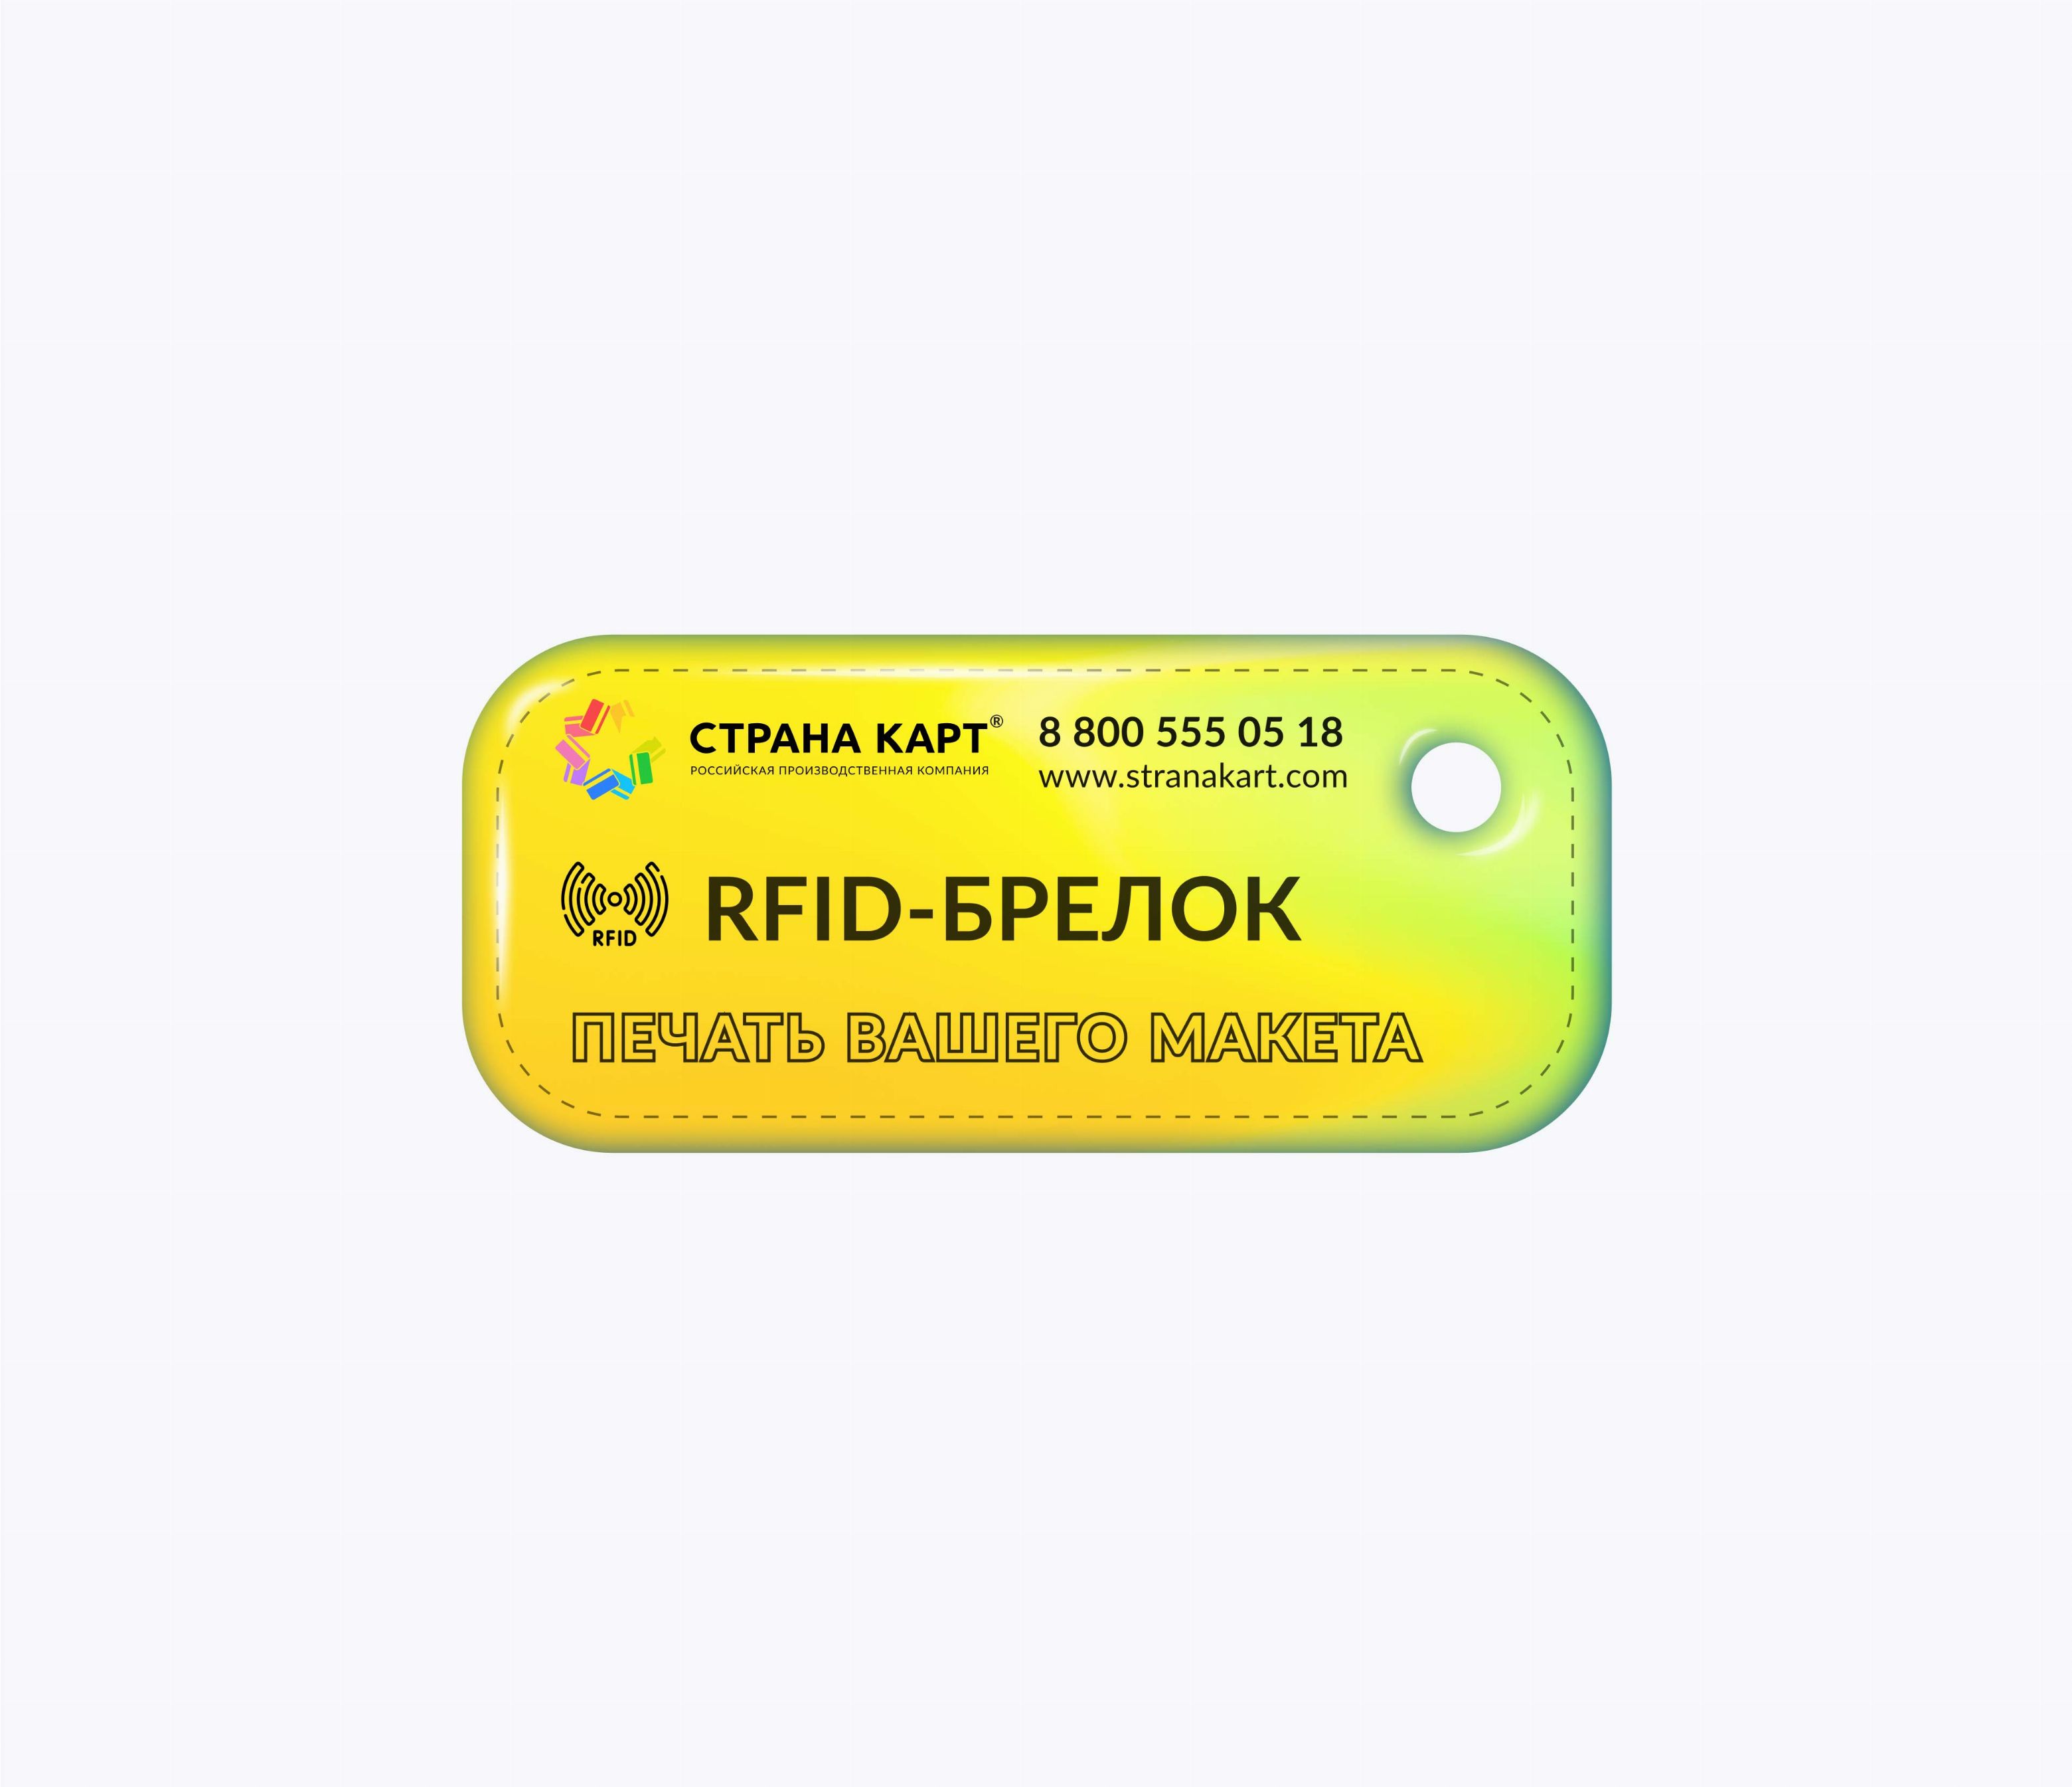 Прямоугольные мини RFID-брелоки NEOKEY® с чипом NXP NFC NTAG 216 RFID-брелоки NEOKEY® с чипом NXP NFC NTAG 216 и вашим логотипом